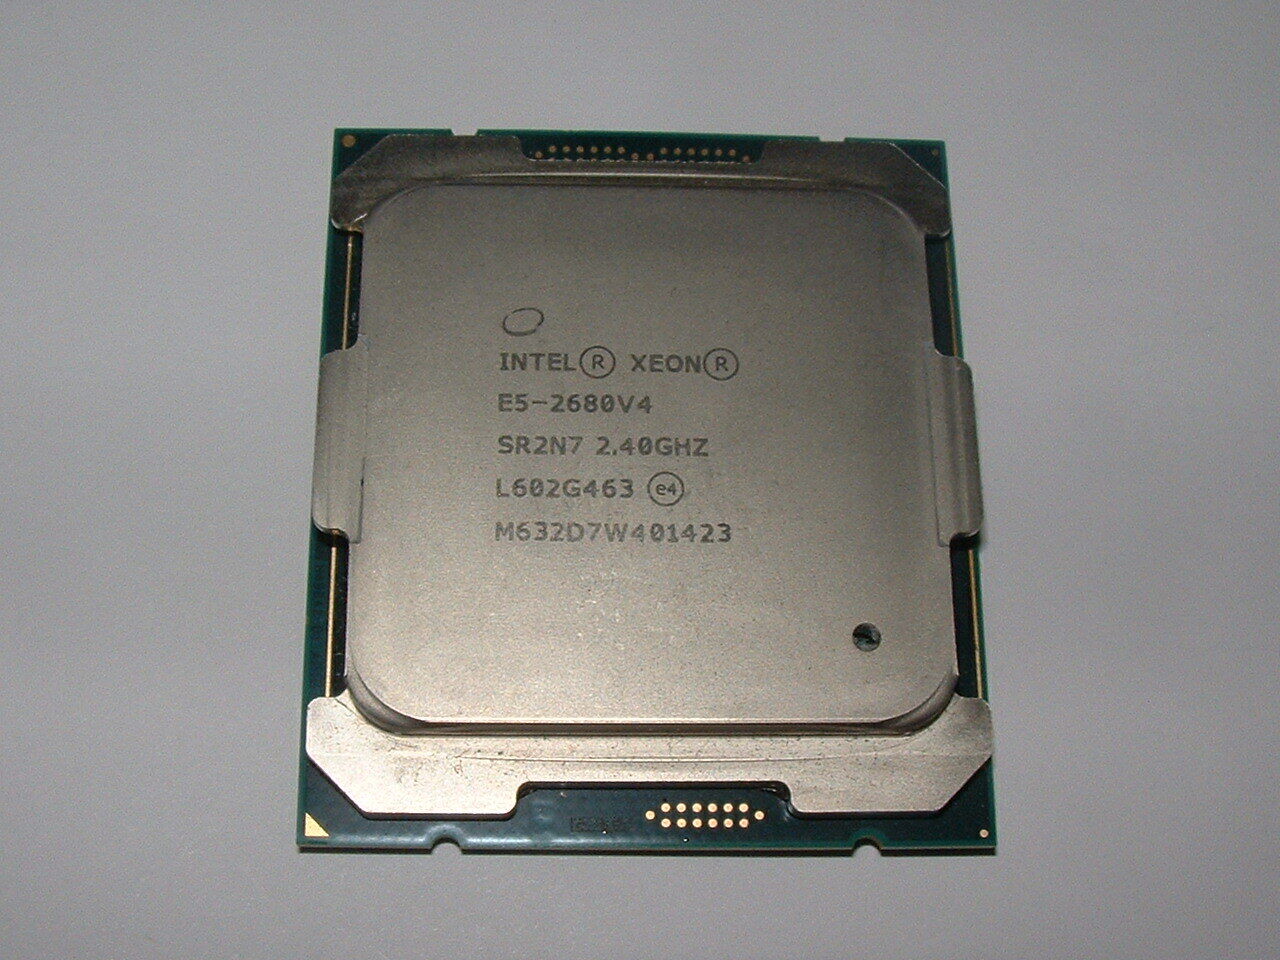 Intel Xeon E5-2680 V4 14 Core 2.4Ghz SR2N7 Processor